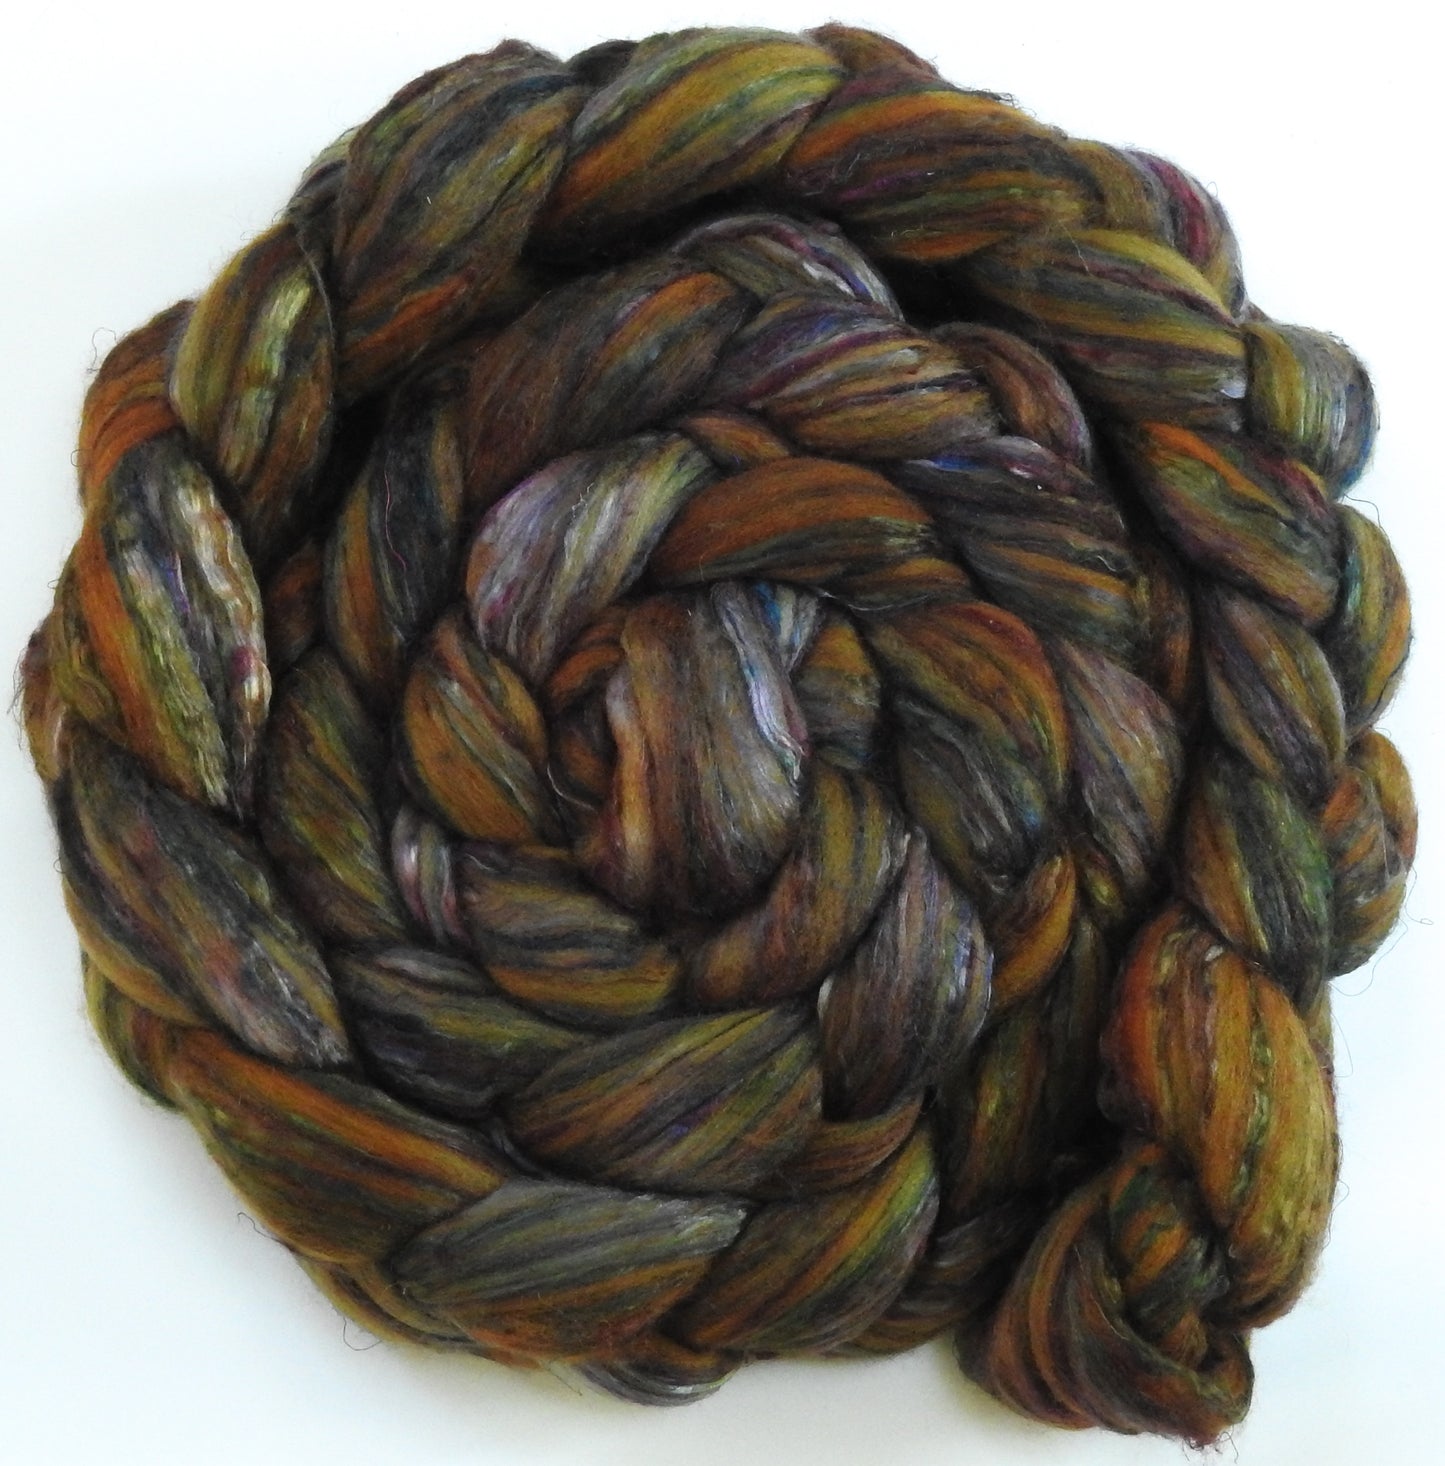 Bronzy Hermit- Glazed Solid (5.9 oz) - Batt in a Braid #39 - Falkland Merino/ Mulberry Silk / Sari Silk (50/25/25)